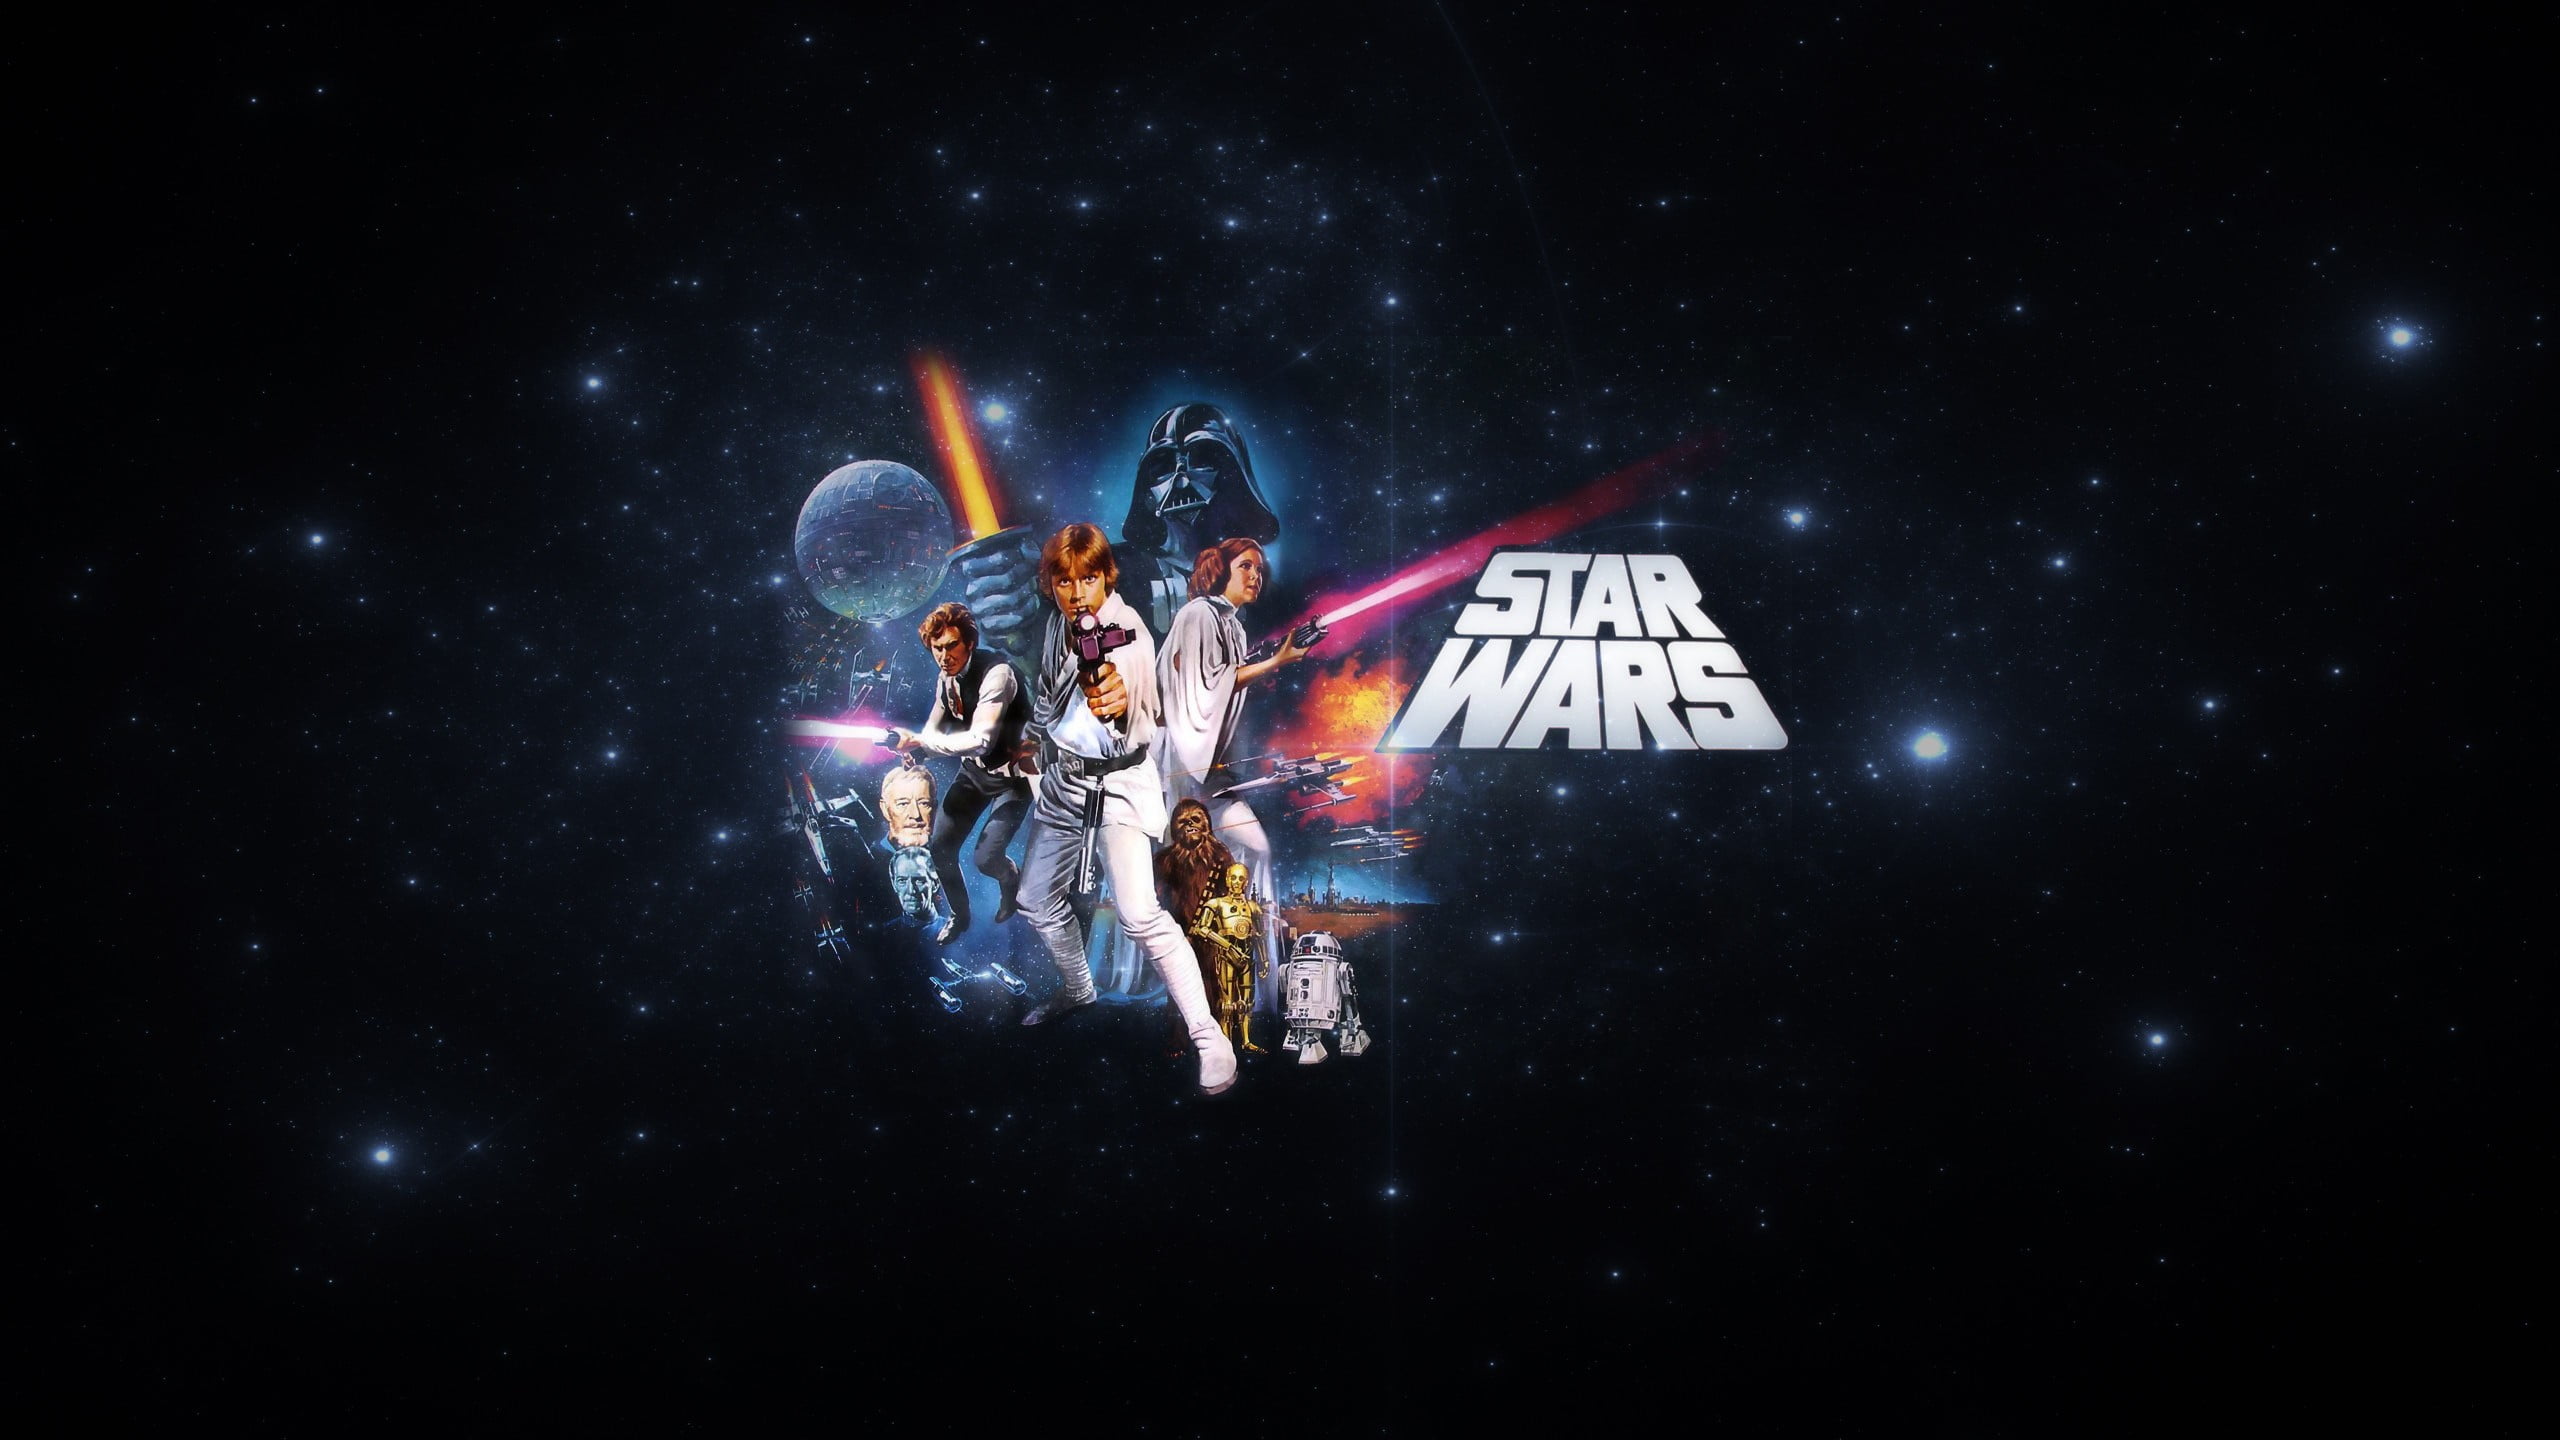 Star Wars illustration, Luke Skywalker, Han Solo, Princess Leia